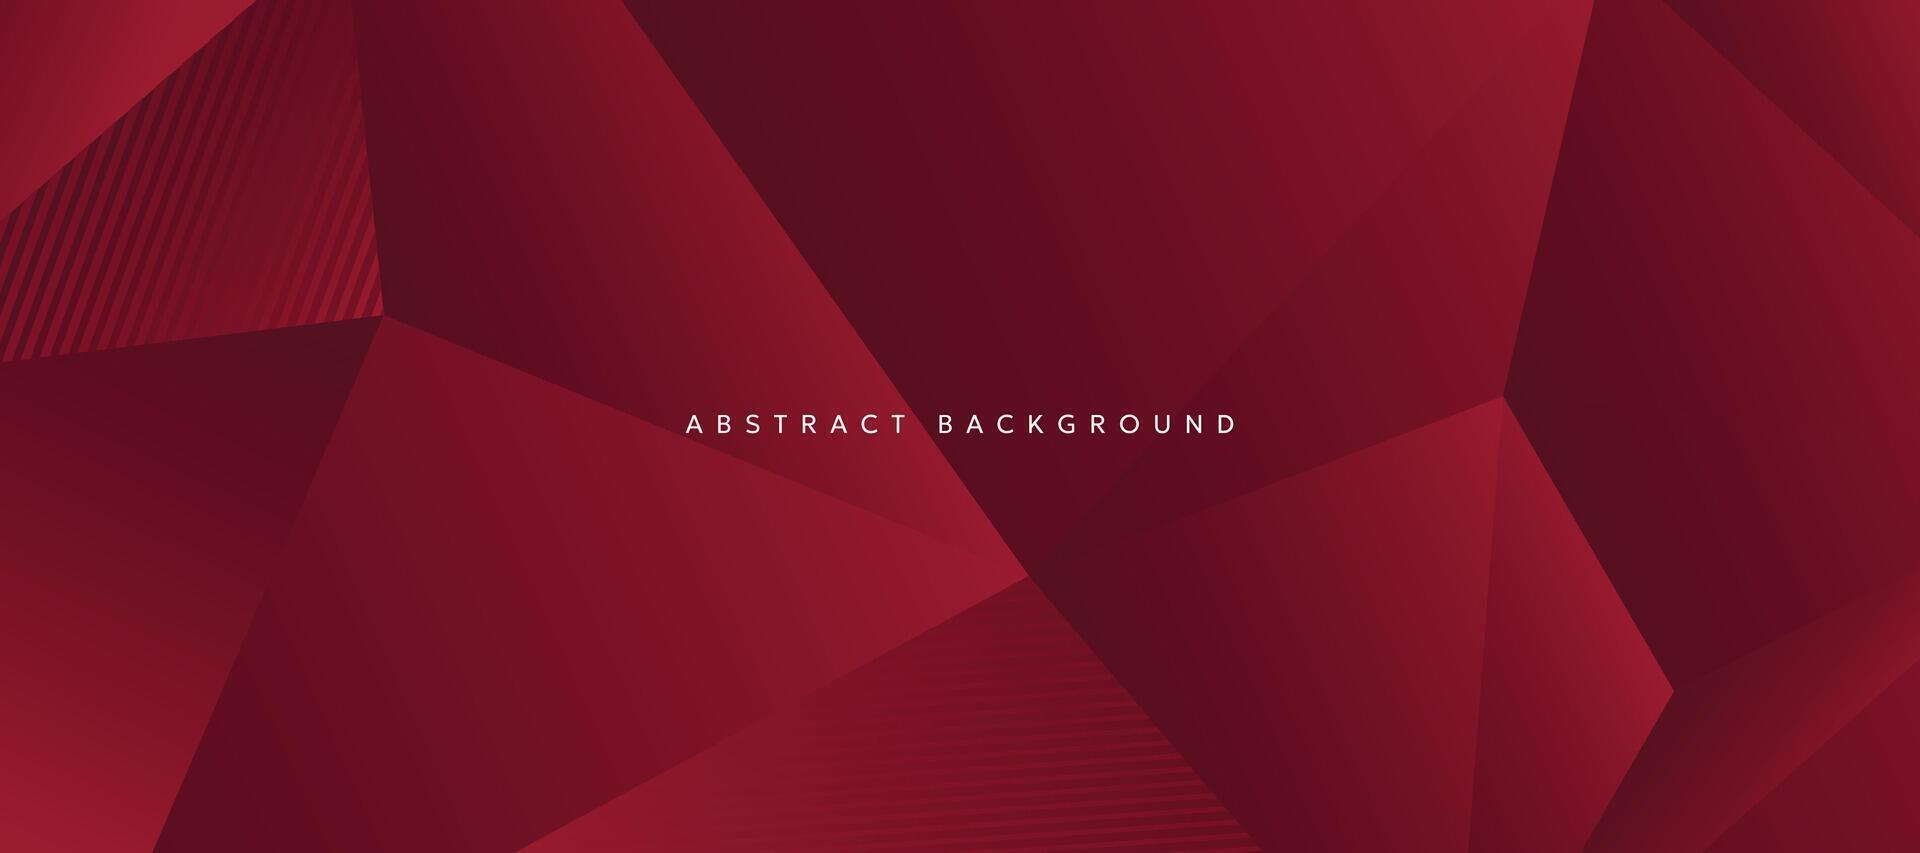 donker rood abstract veelhoek achtergrond vector